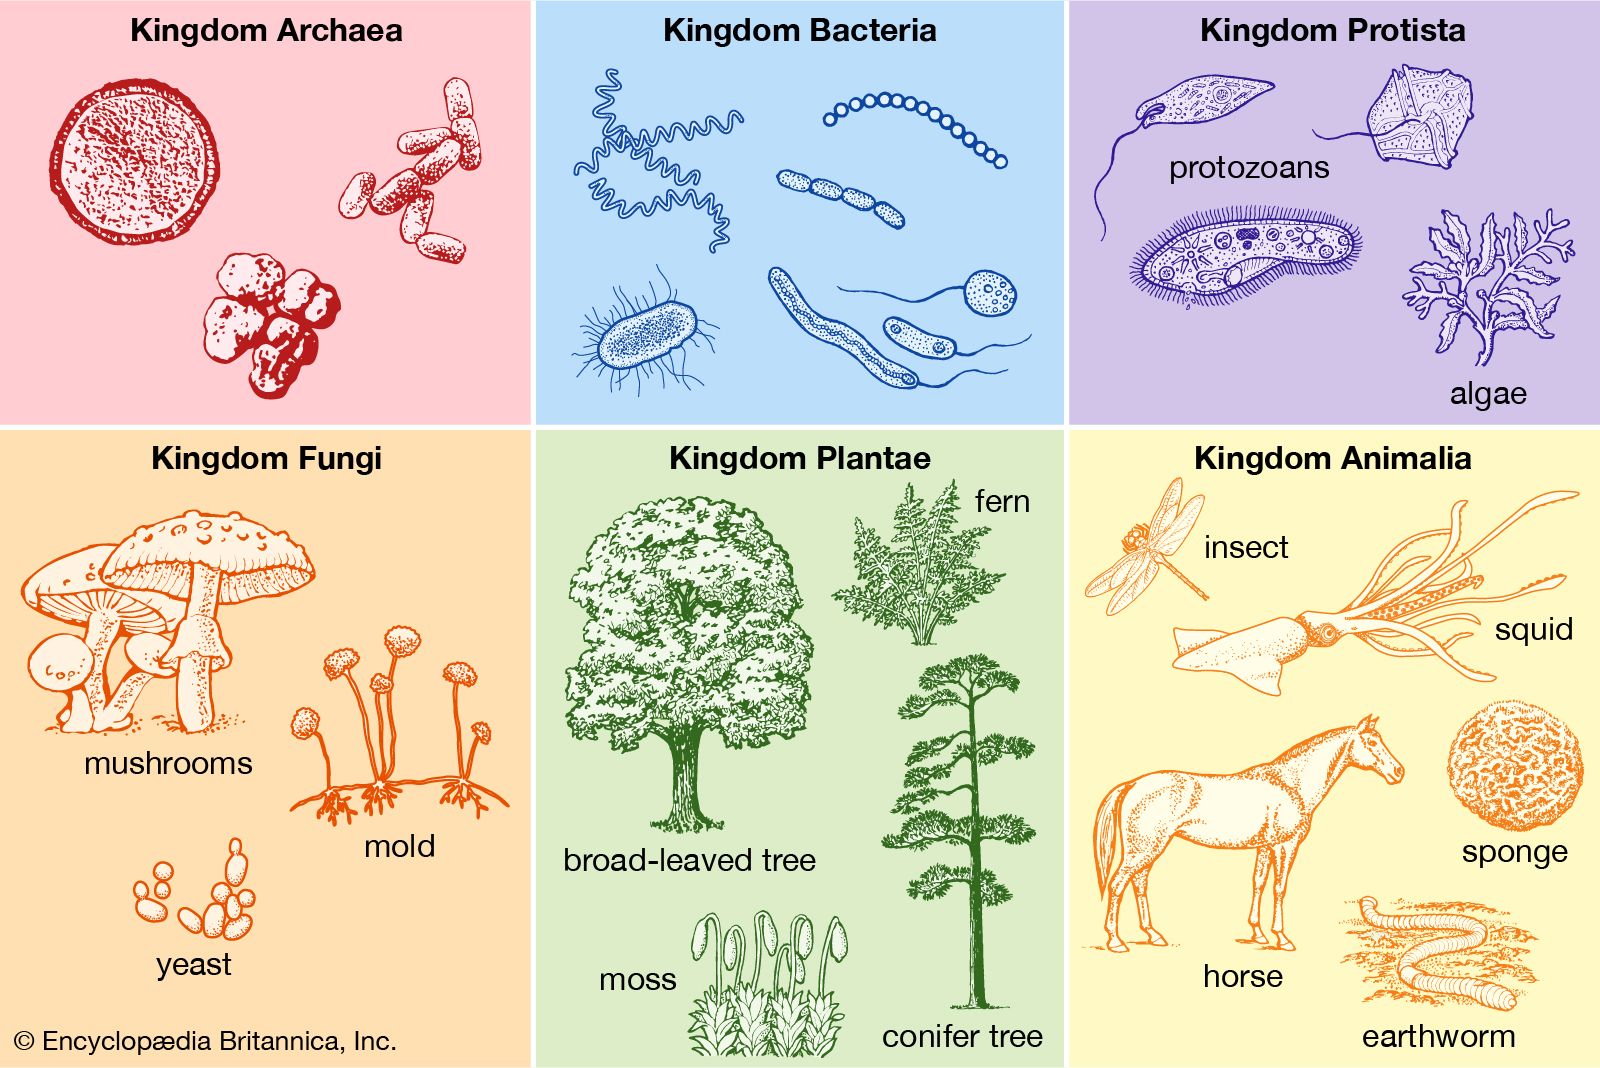 biological classification